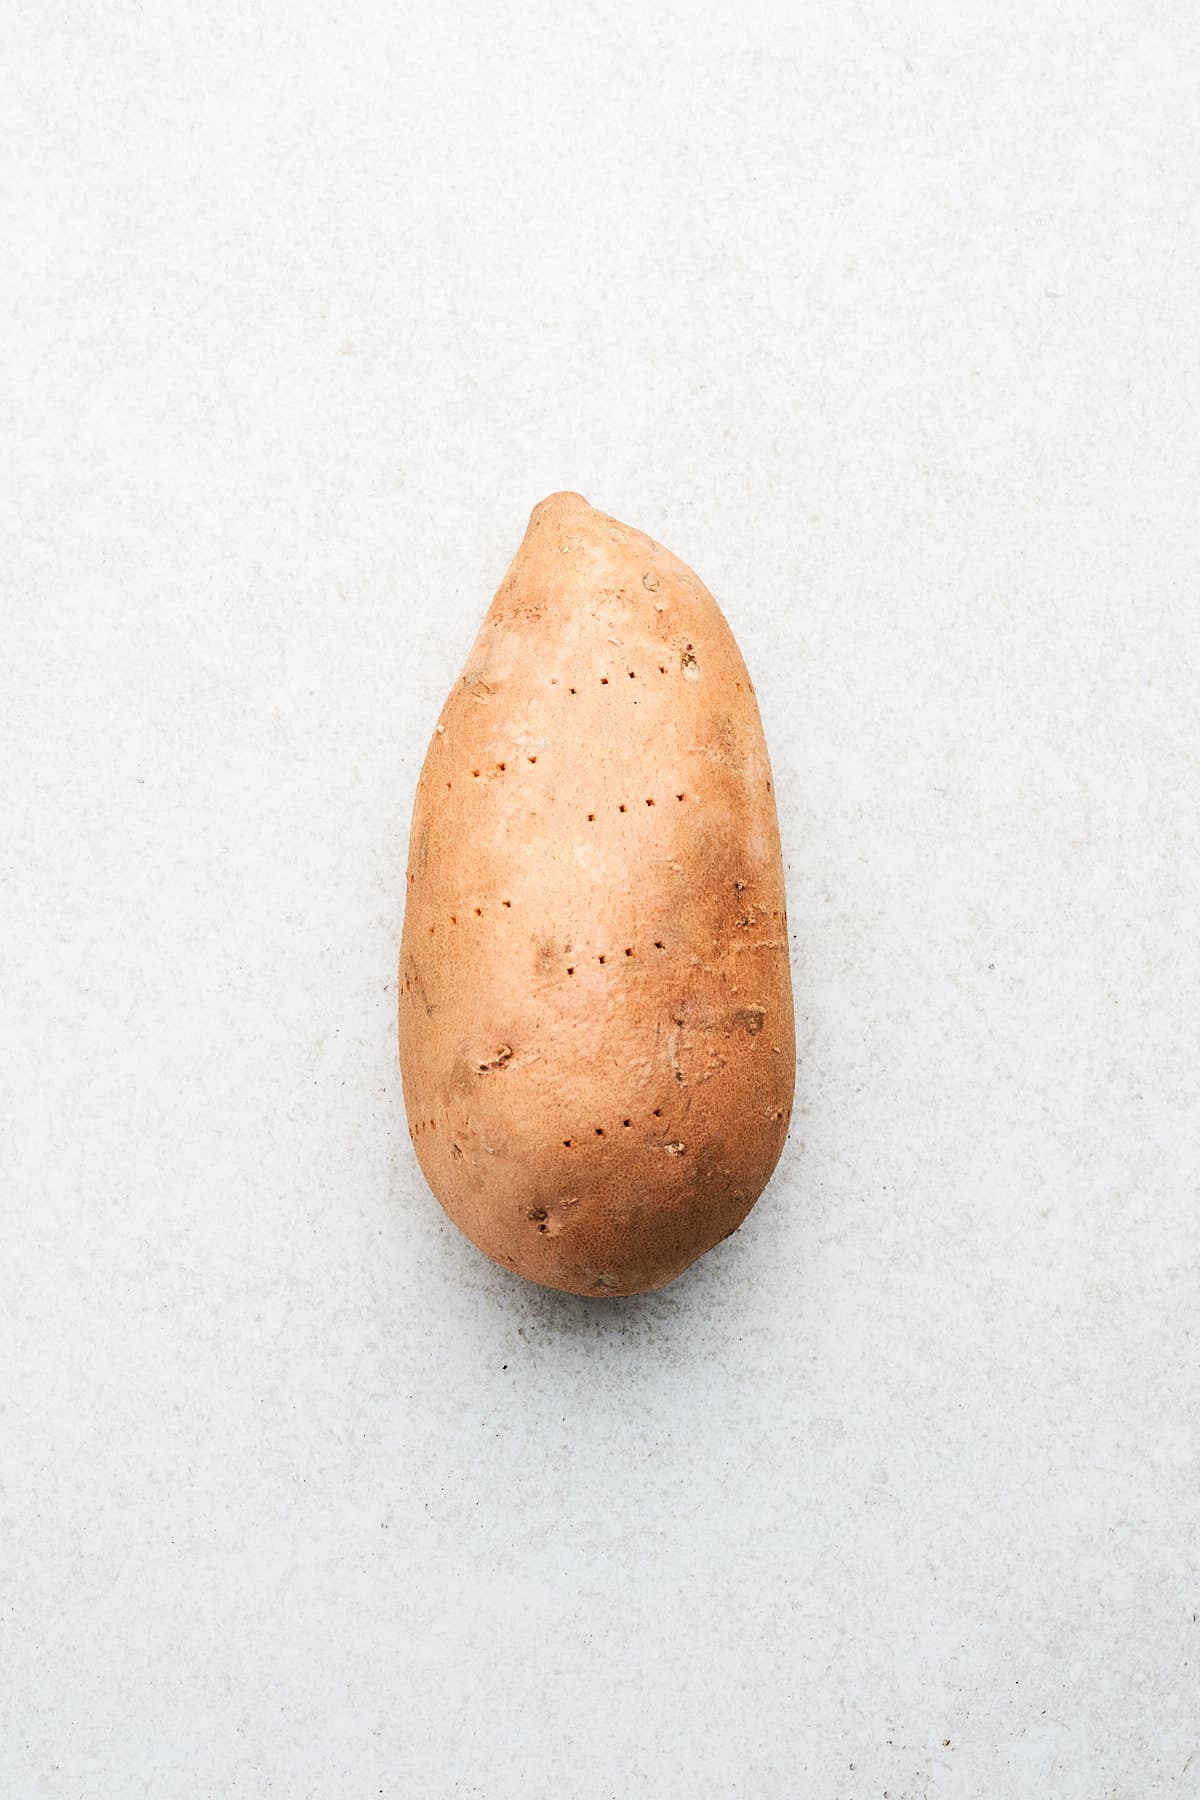 Sweet potato with fork pricks.